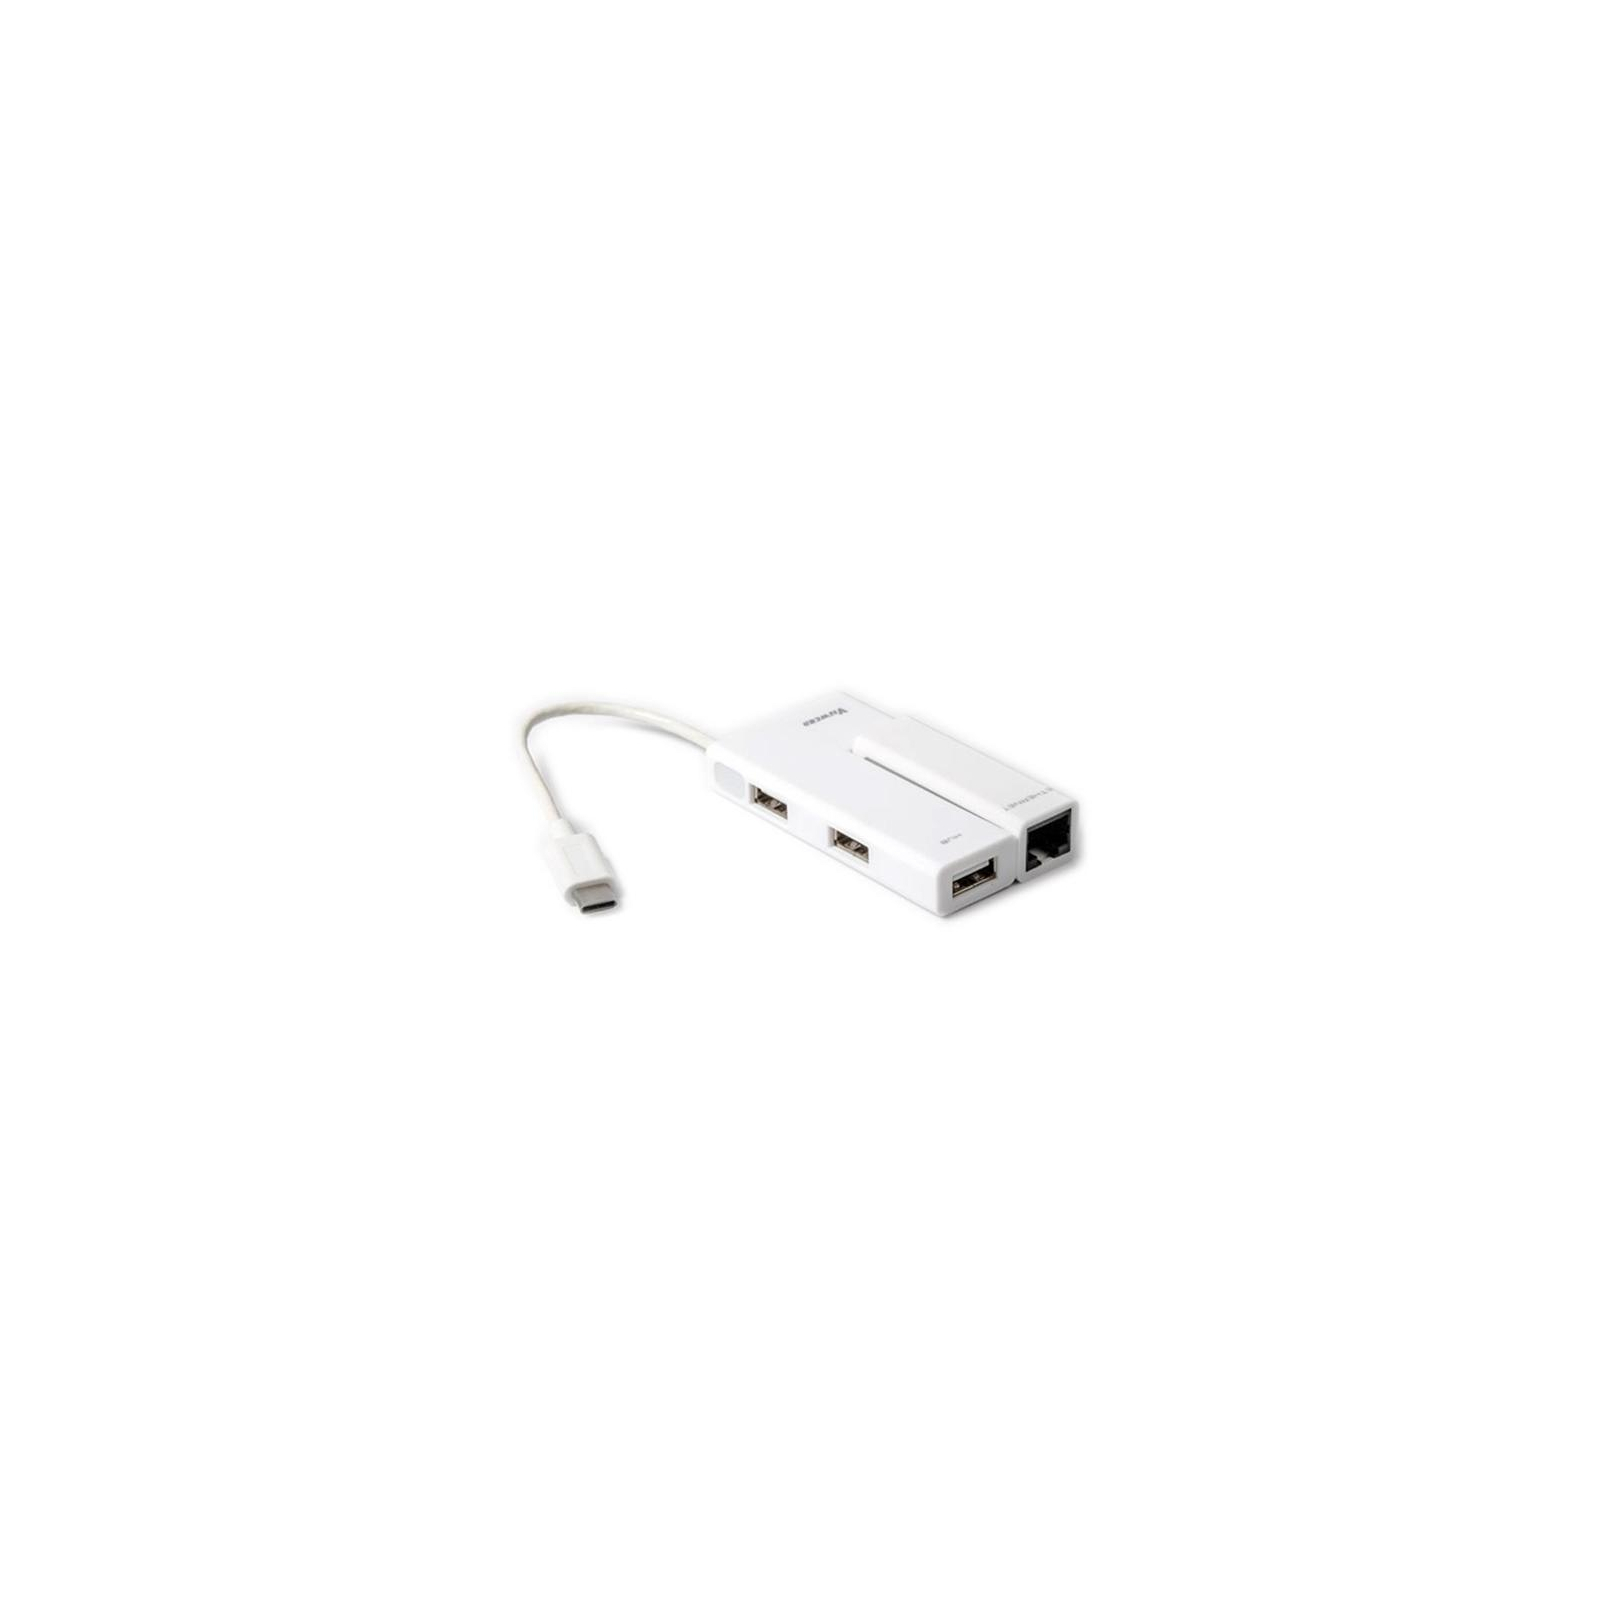 Переходник Type-C to Ethernet&USB Viewcon (VC 450 W (White)) изображение 2